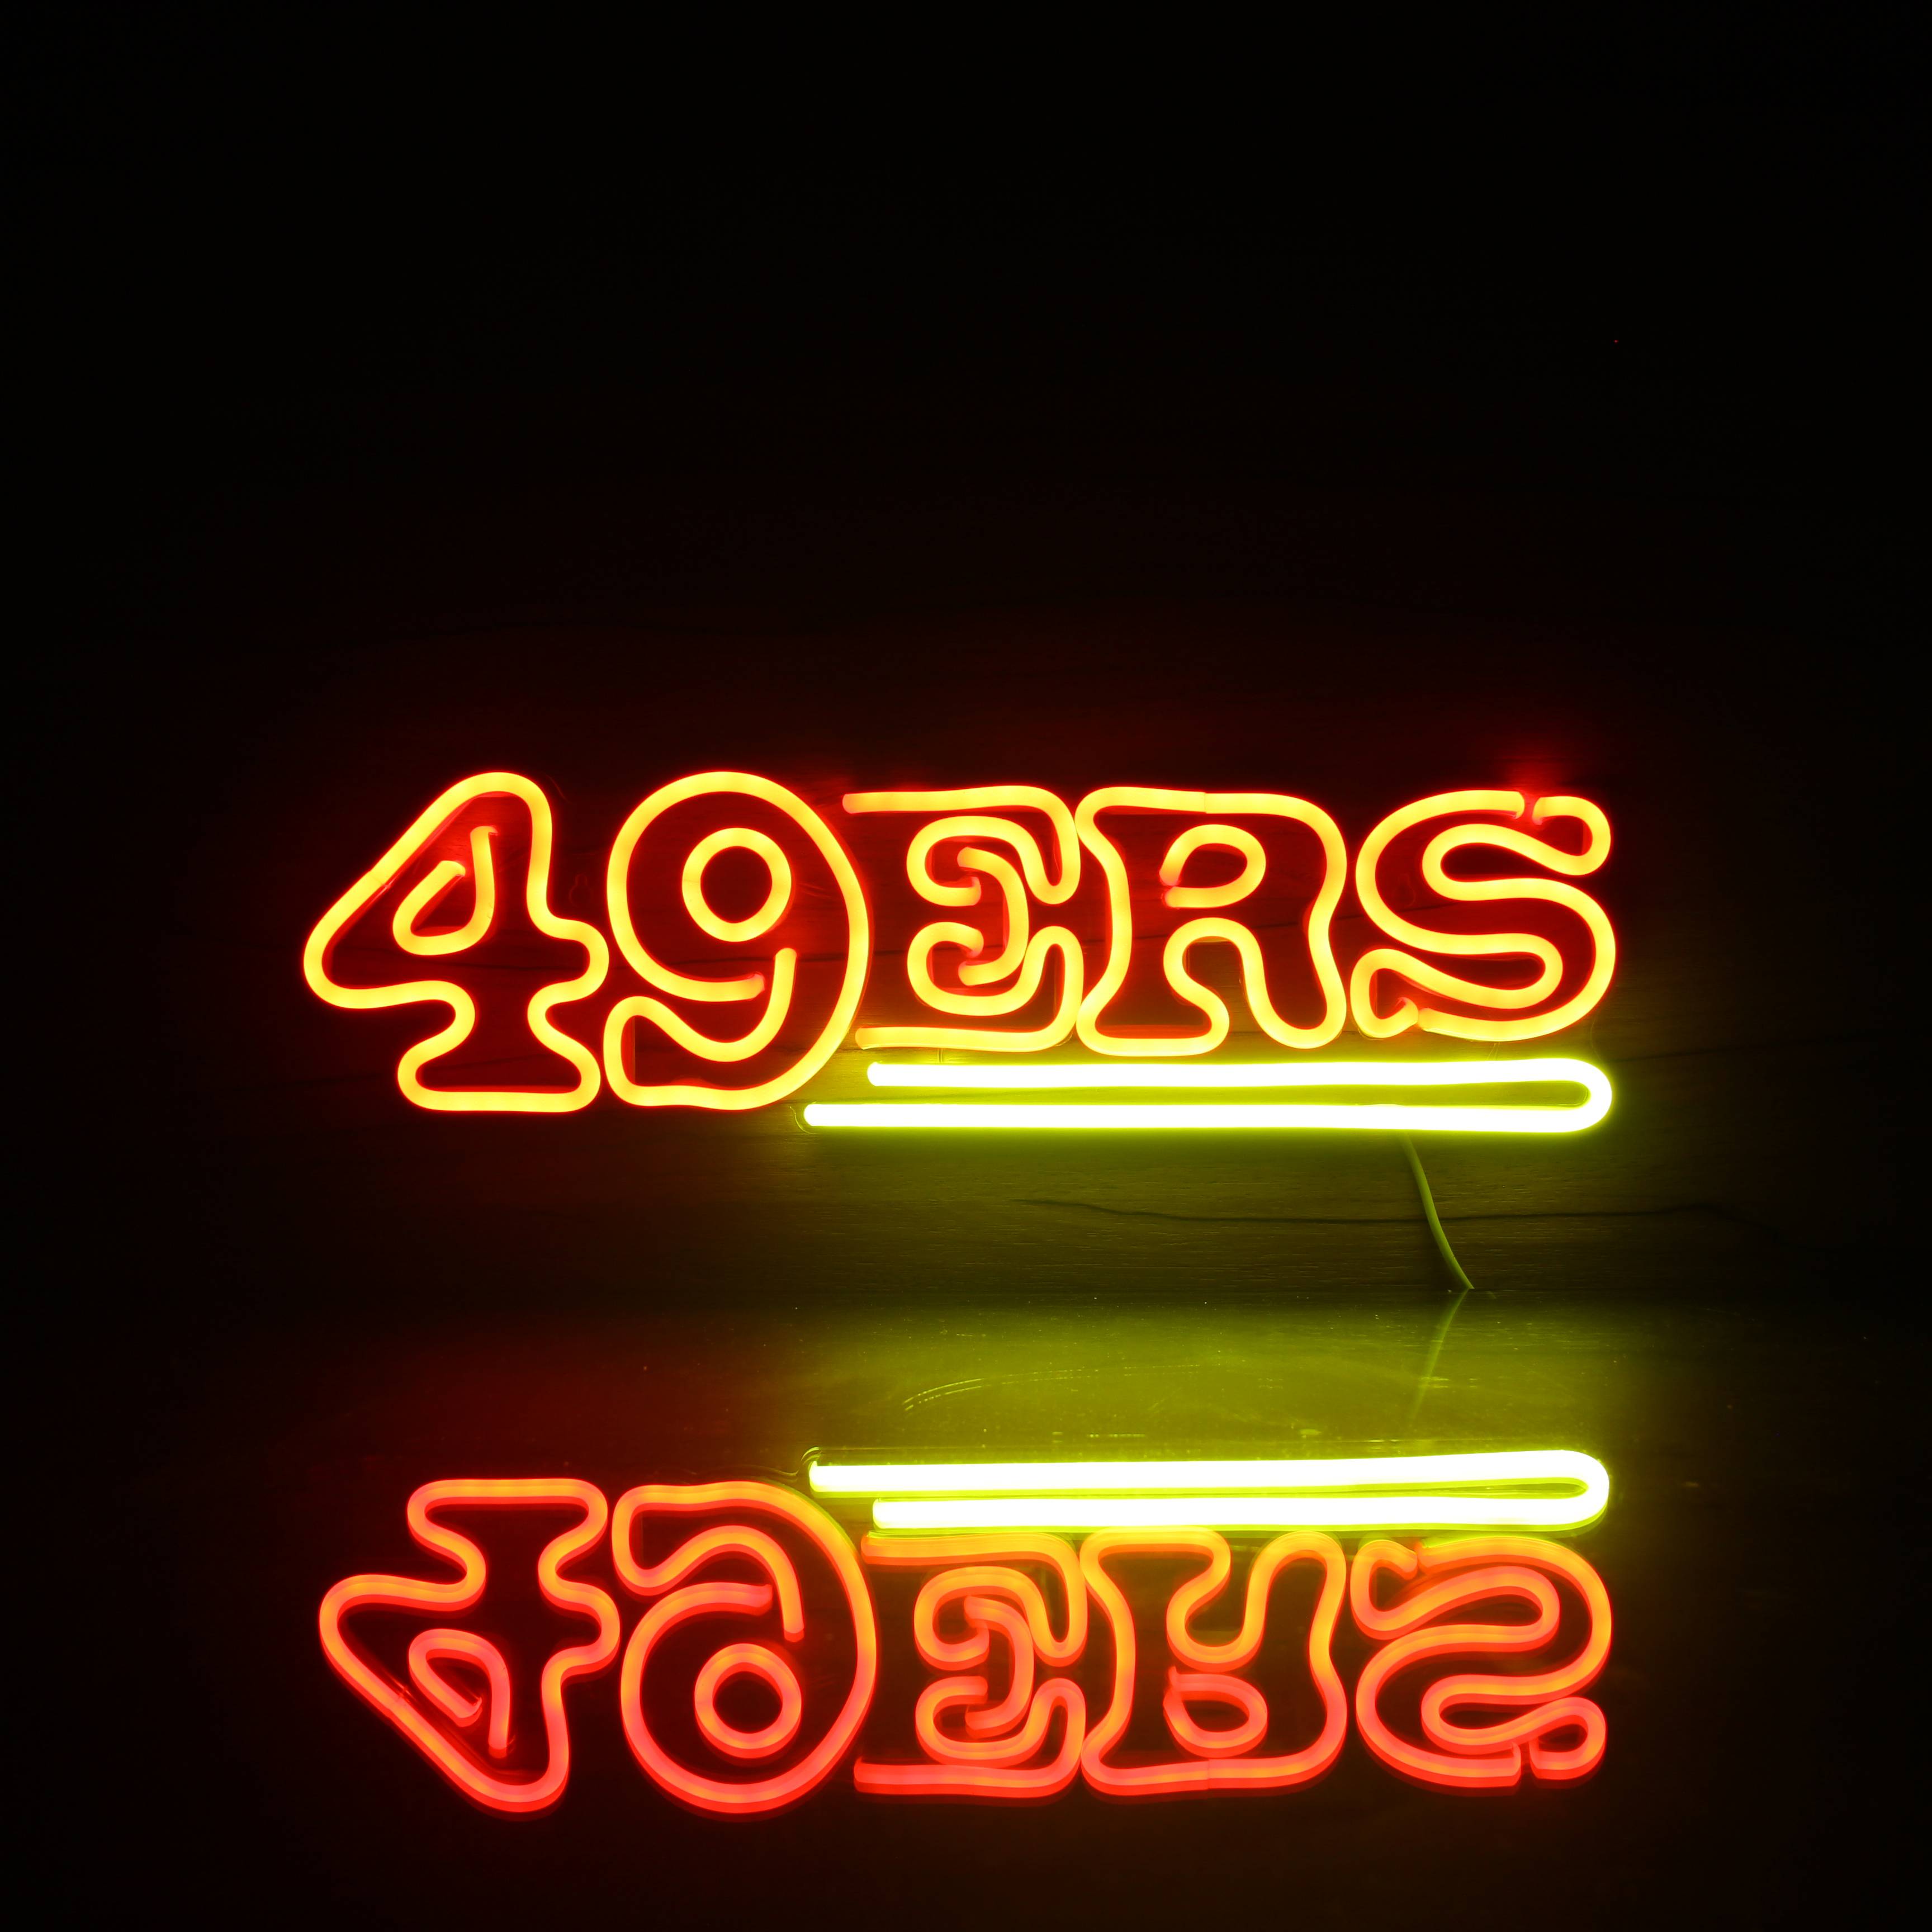 San Francisco 49ers Neon LED Sign Home Decor Bar, SF Night Light Up